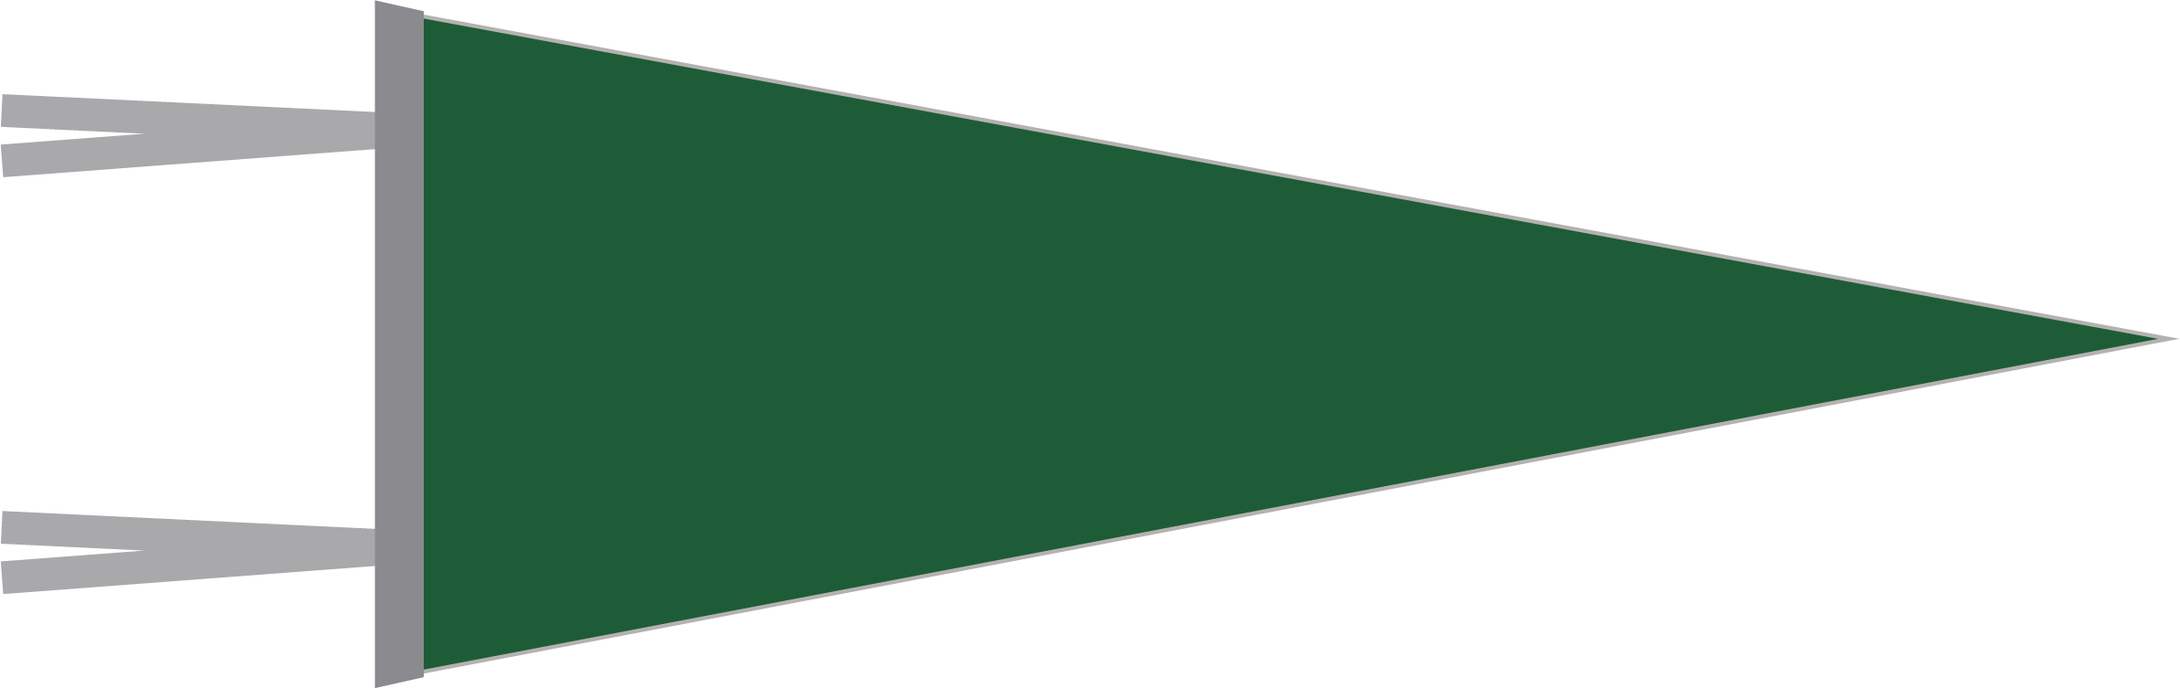 Green / Heather Grey Blank Pennant Flag